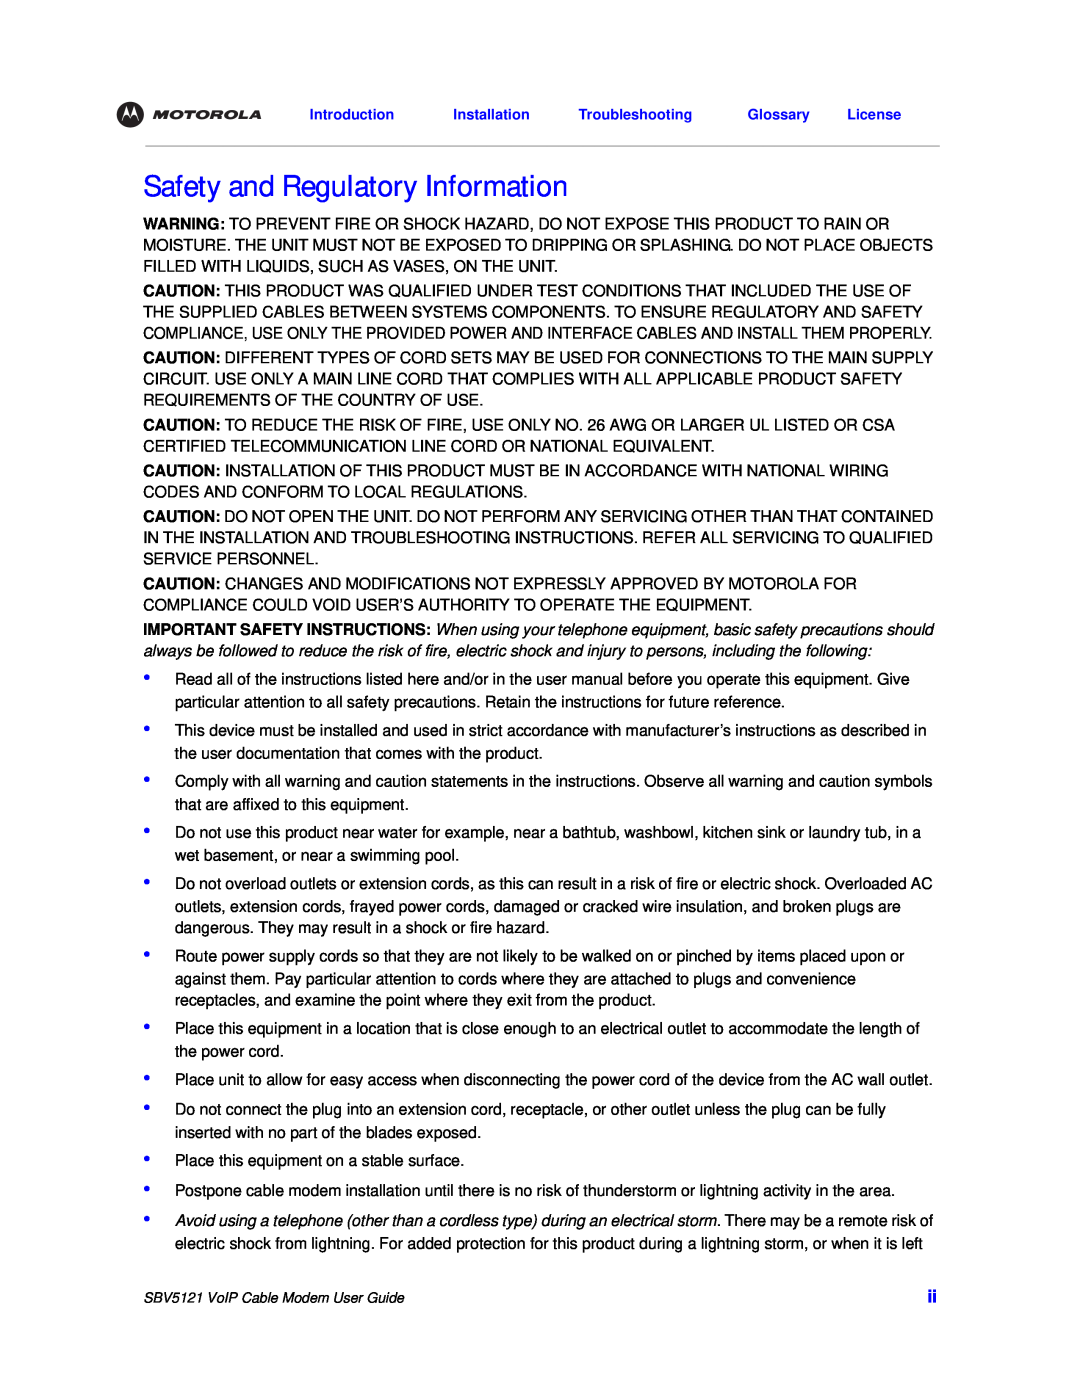 Nikon SBV5121 manual Safety and Regulatory Information 